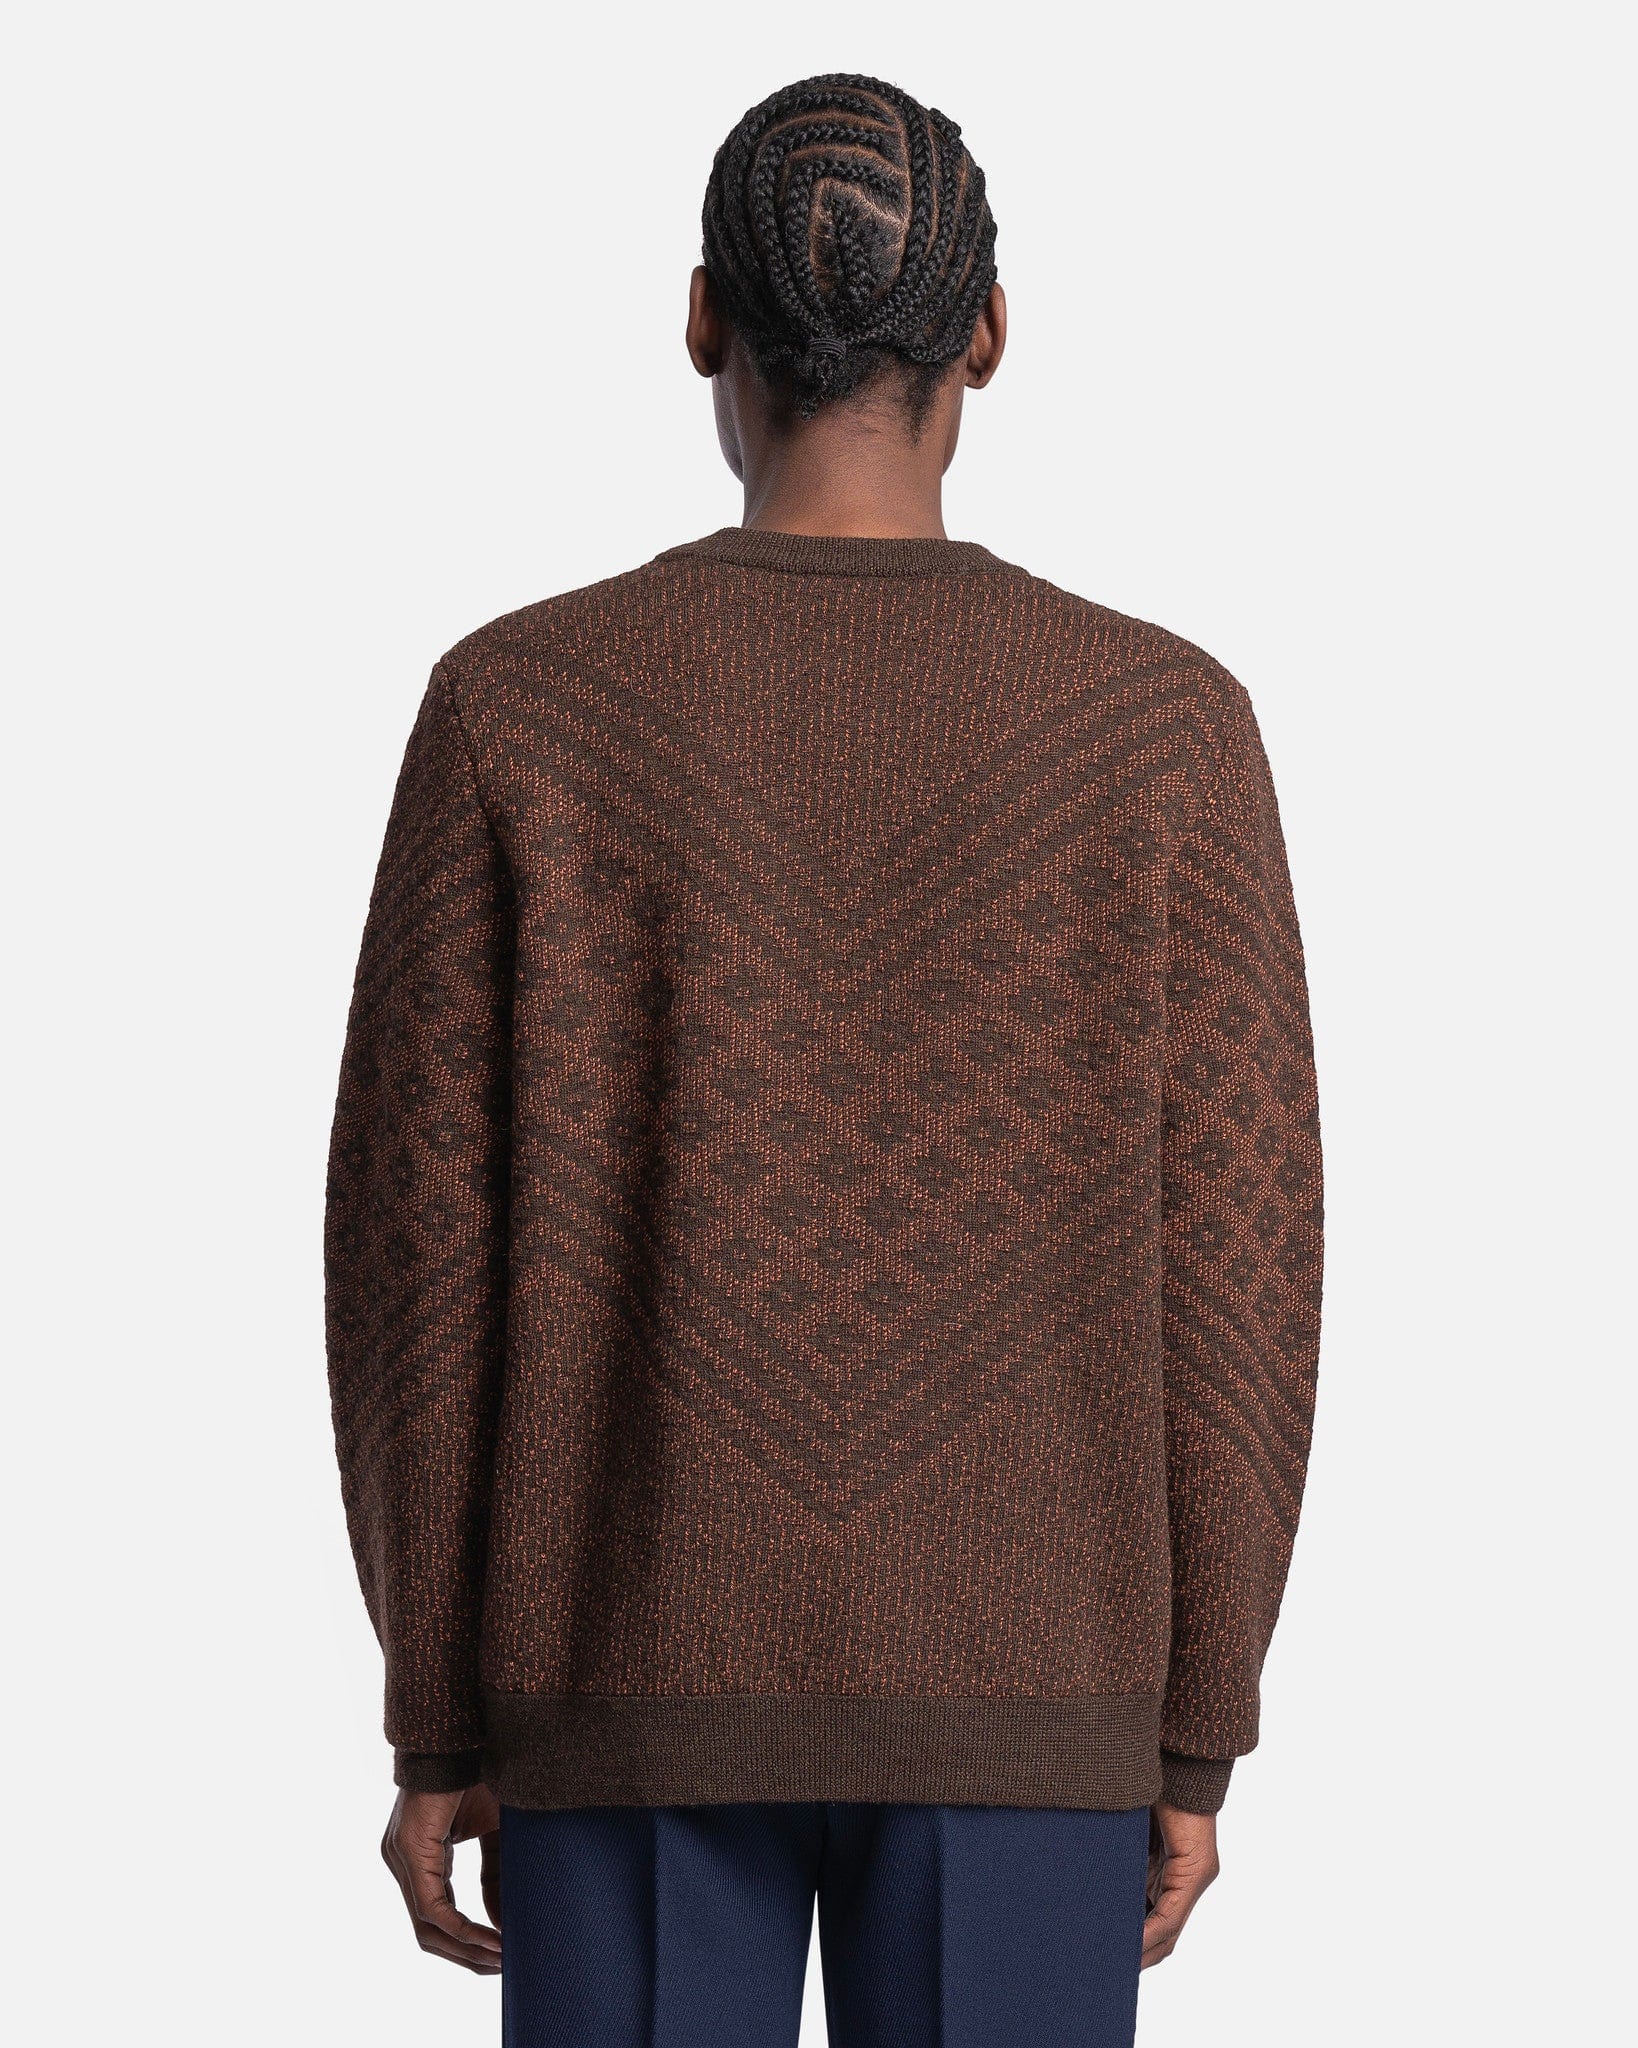 Wales Bonner Men's Sweater Henri Sweater in Brown/Orange